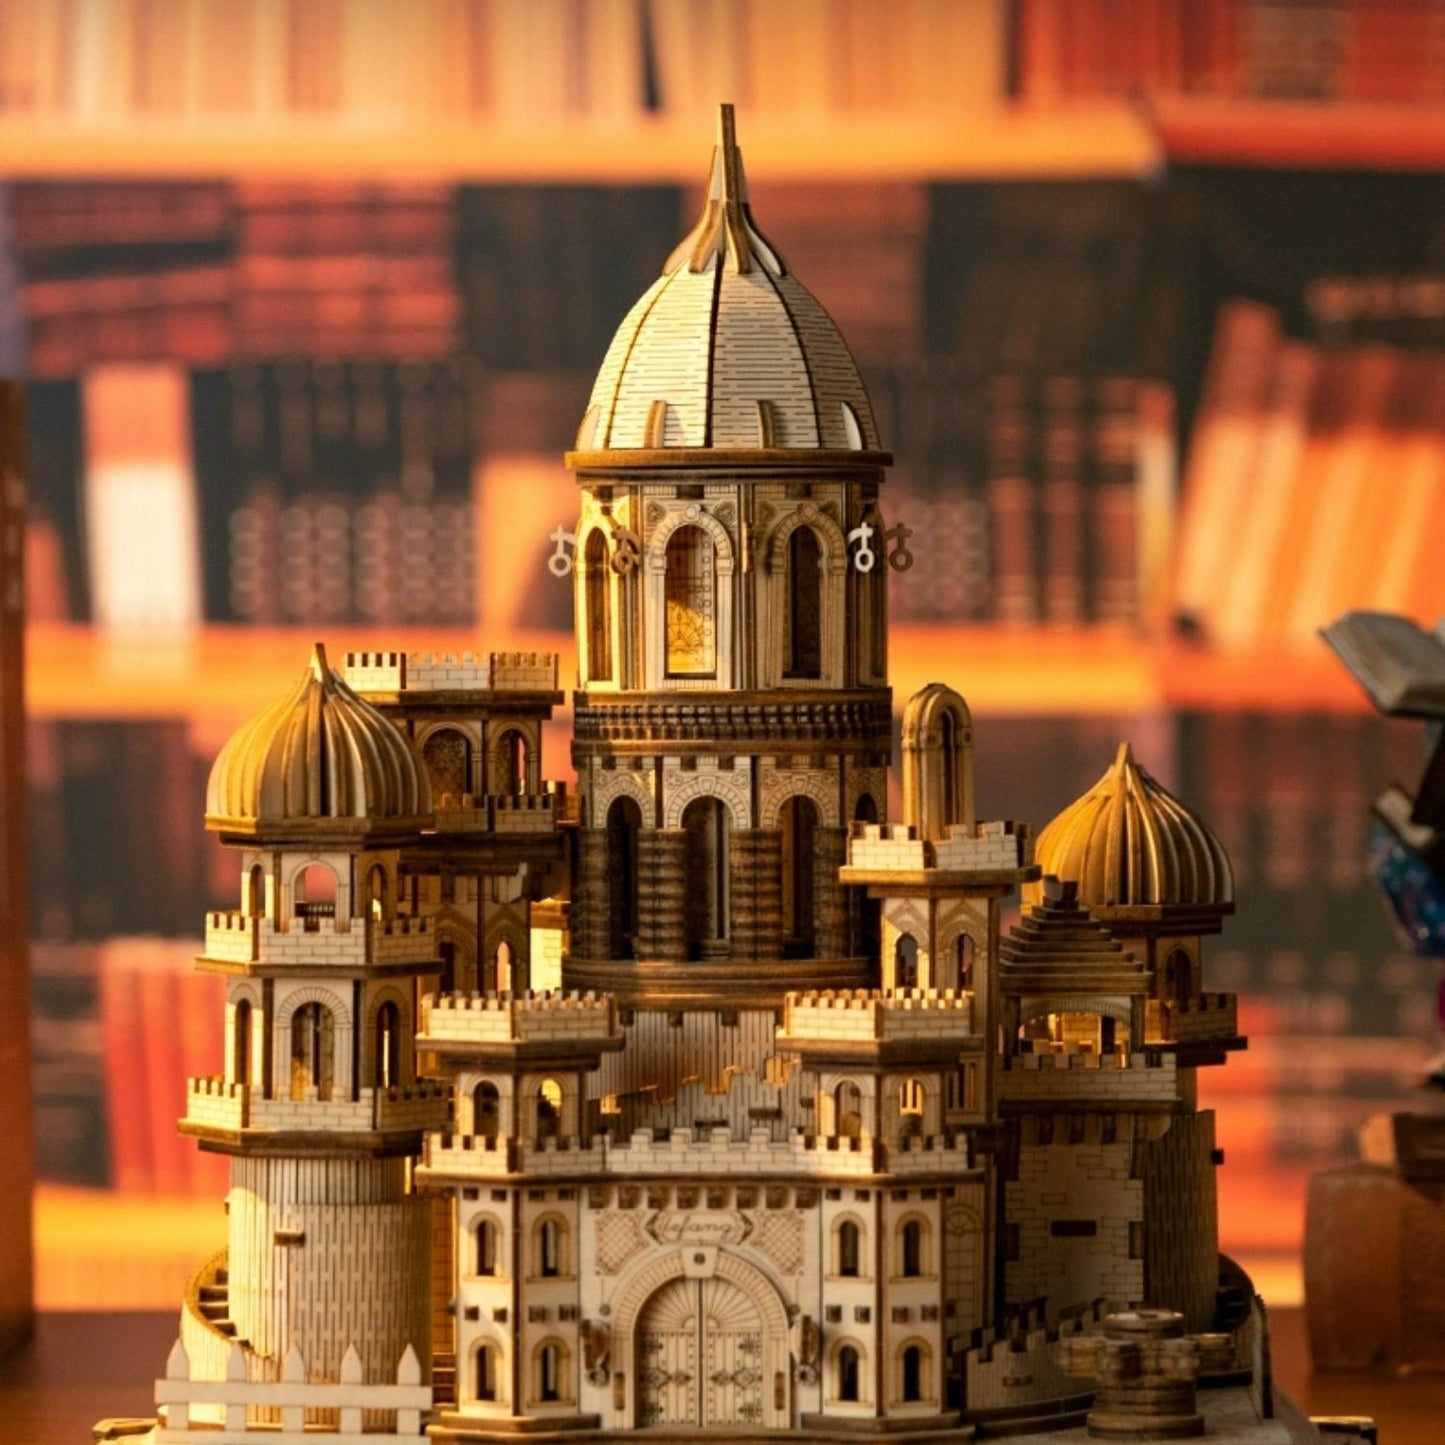 Magic Castle 3D Wooden Puzzle | Moving Gears | Mechanical Models | Miniature